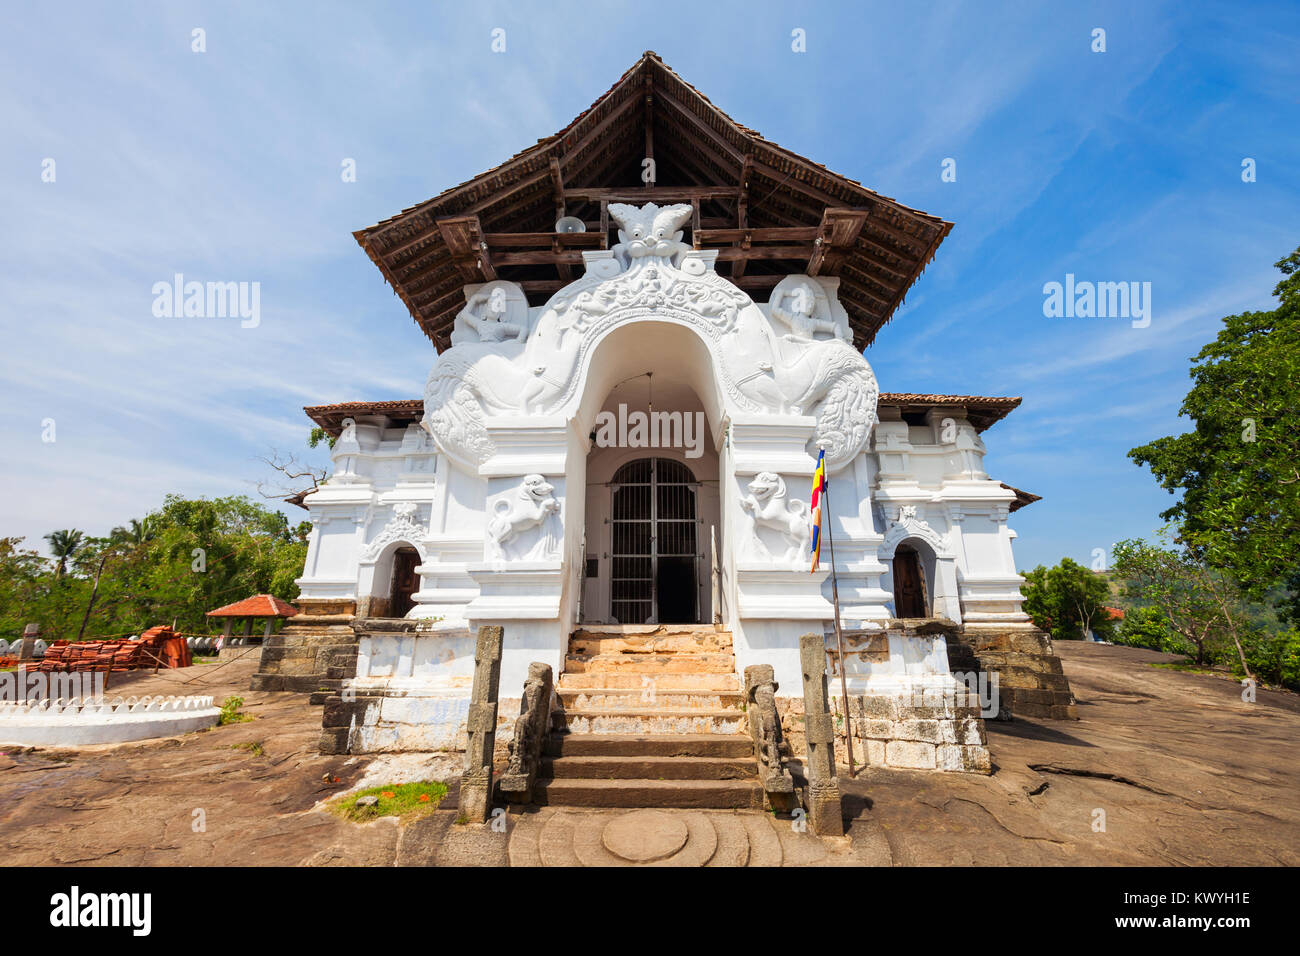 Lankatilaka Vihara oder Sri Lankathilake Rajamaha Viharaya ist eine alte buddhistische Tempel in Udunuwara von Kandy, Sri Lanka gelegen Stockfoto